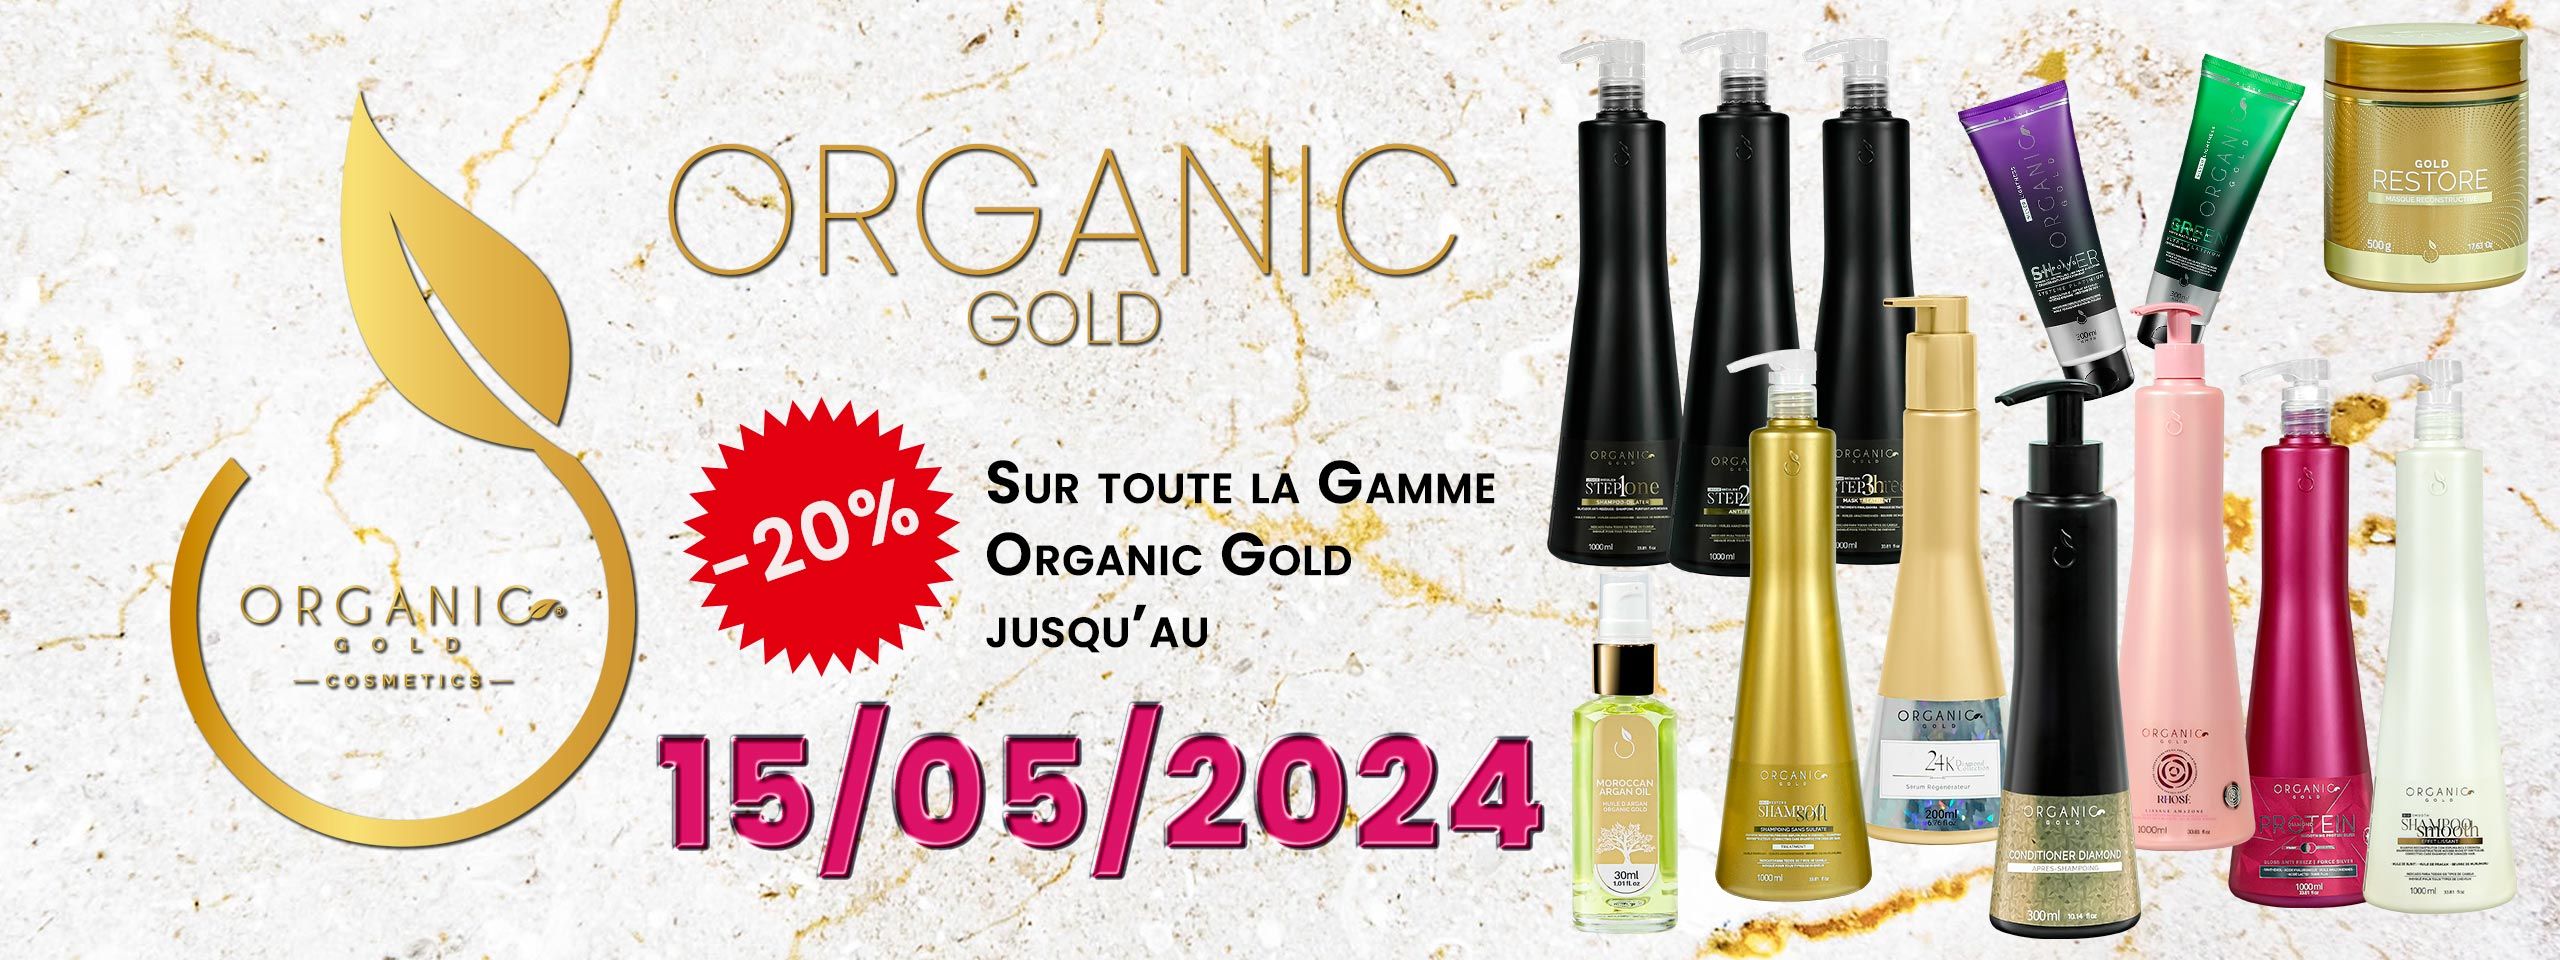 Promotion Organic Gold